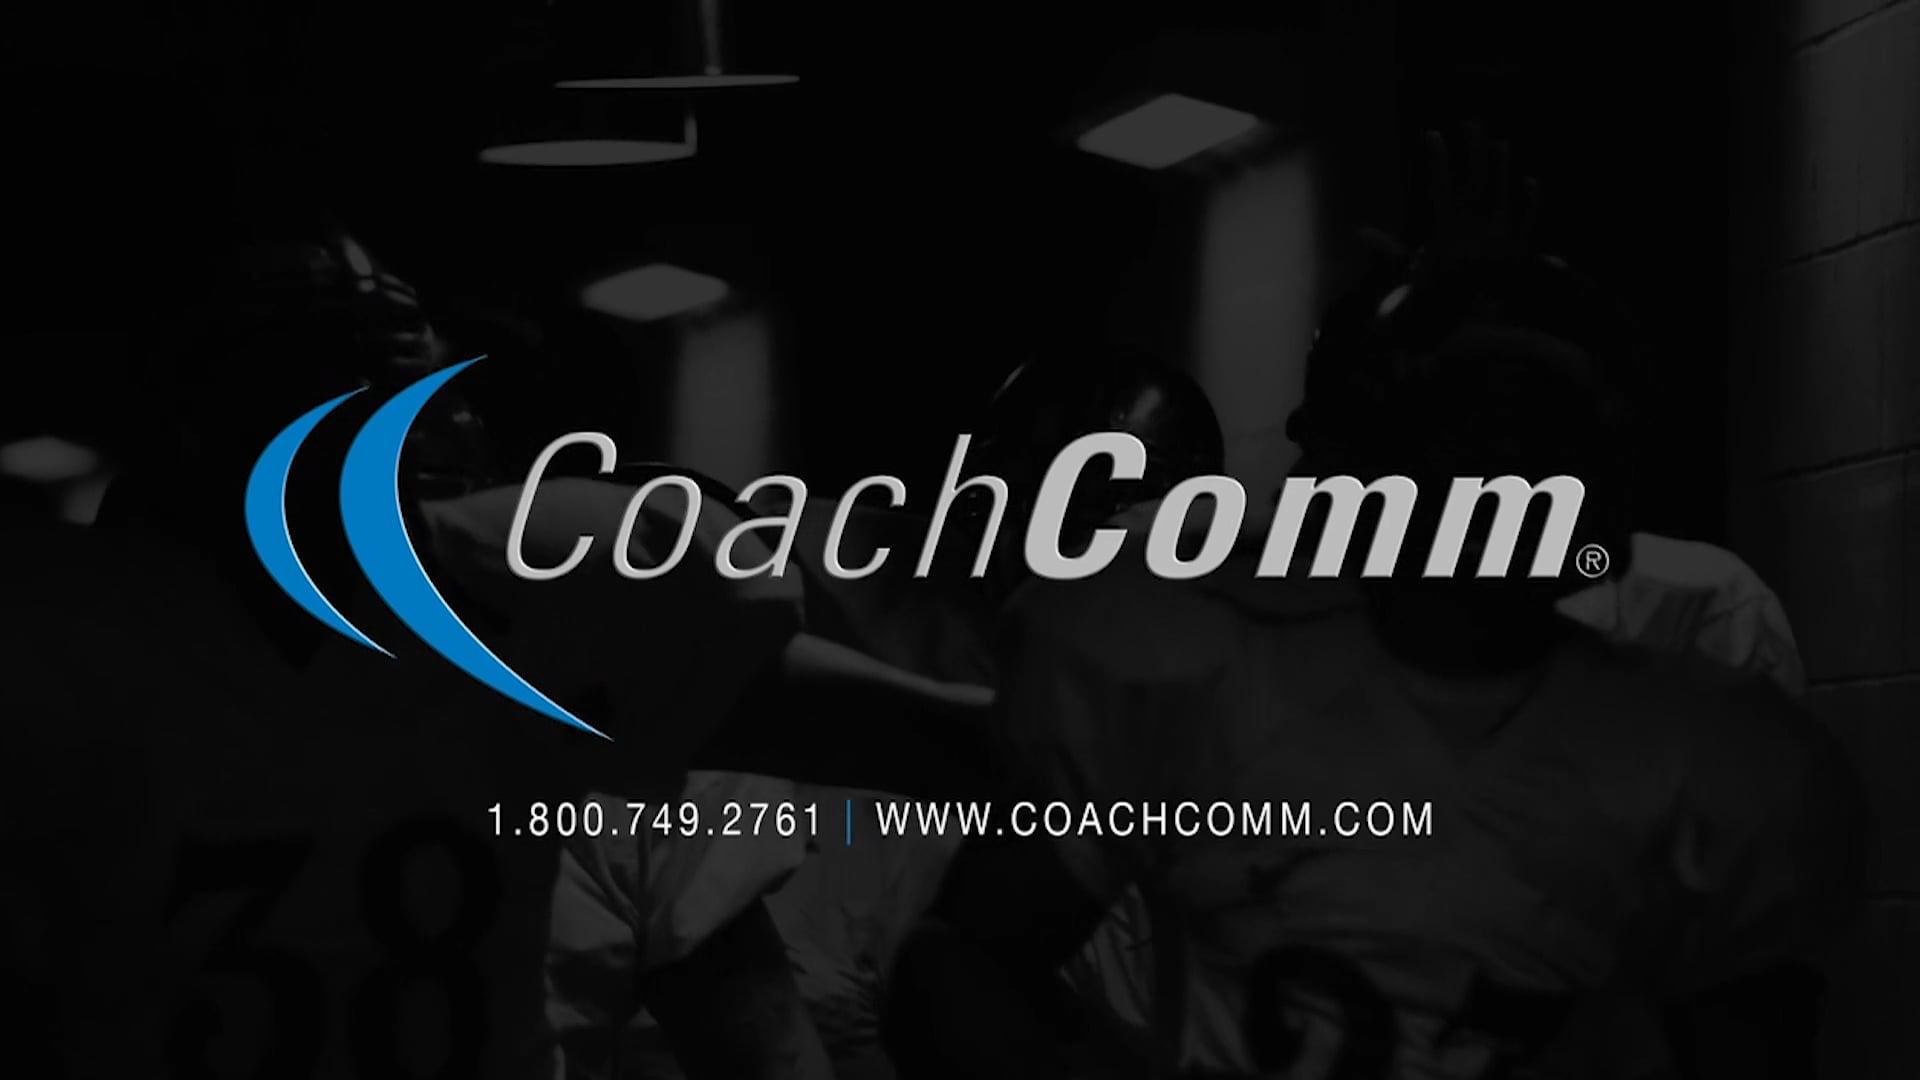 CoachComm College - Testimonials